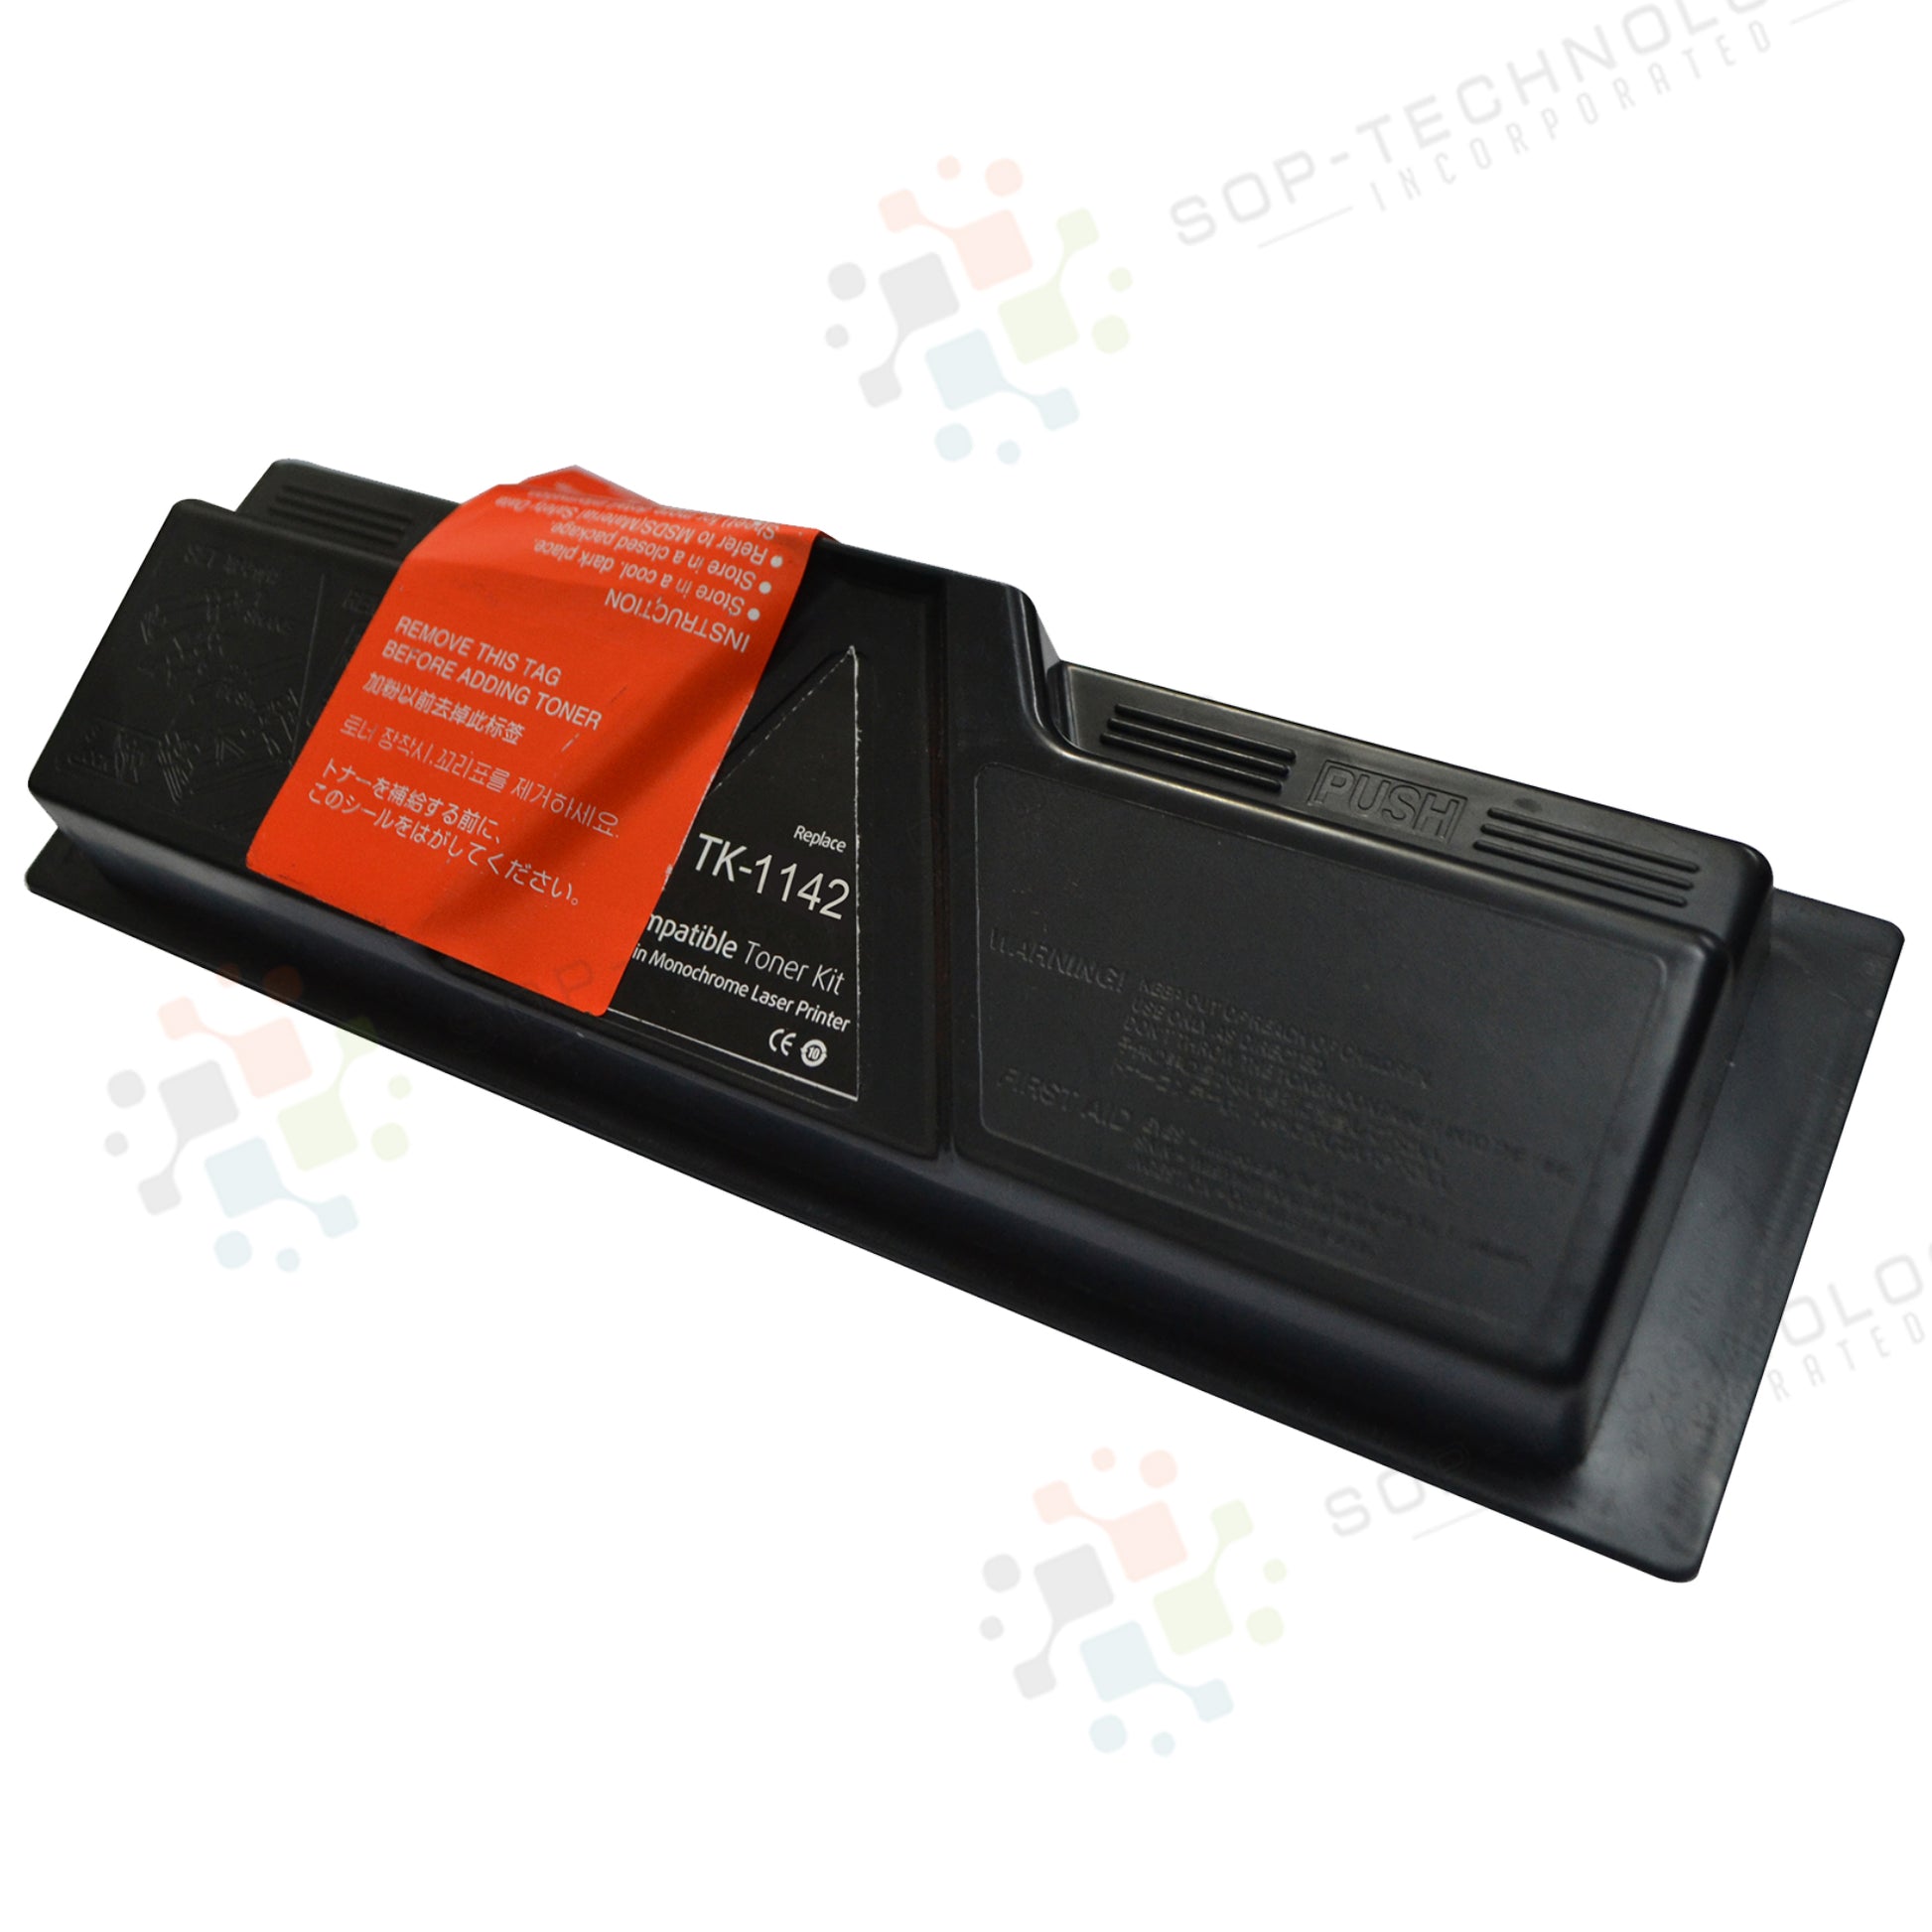 3 Pack Toner Cartridge for Kyocera FS-1035MFP - SOP-TECHNOLOGIES, INC.